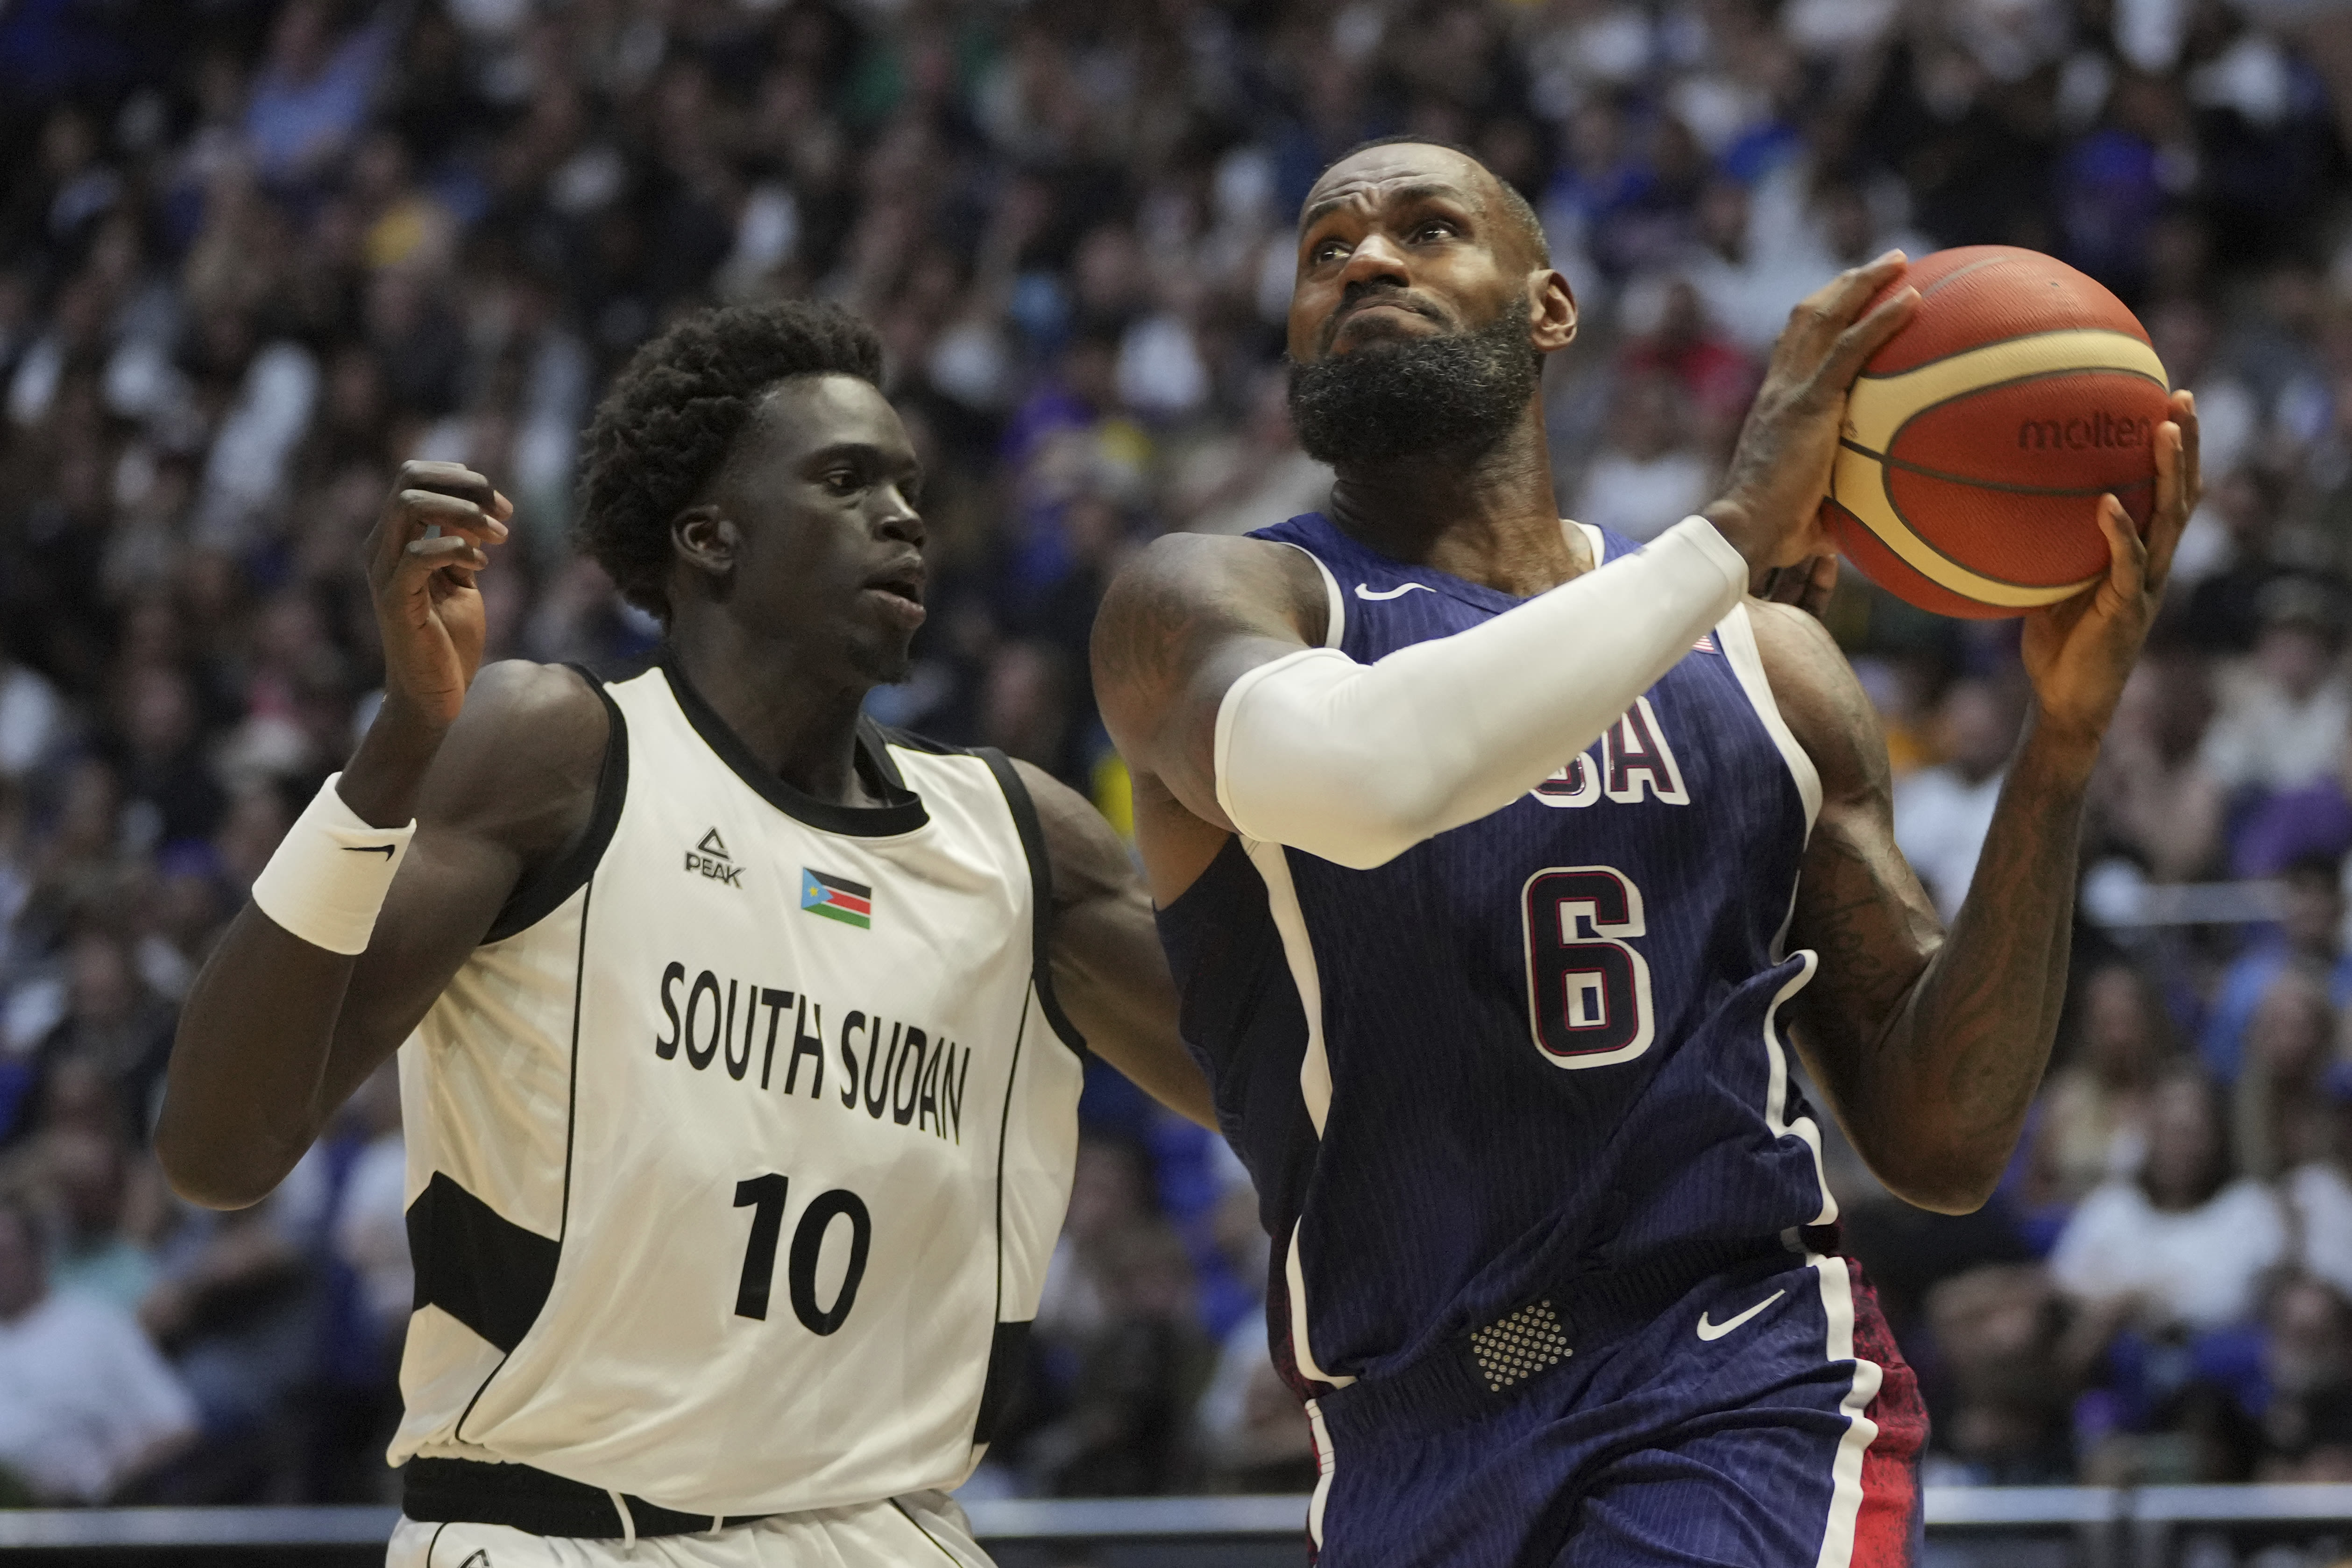 Team USA defeats South Sudan in narrow 101-100 victory ahead of Paris 2024 Olympics